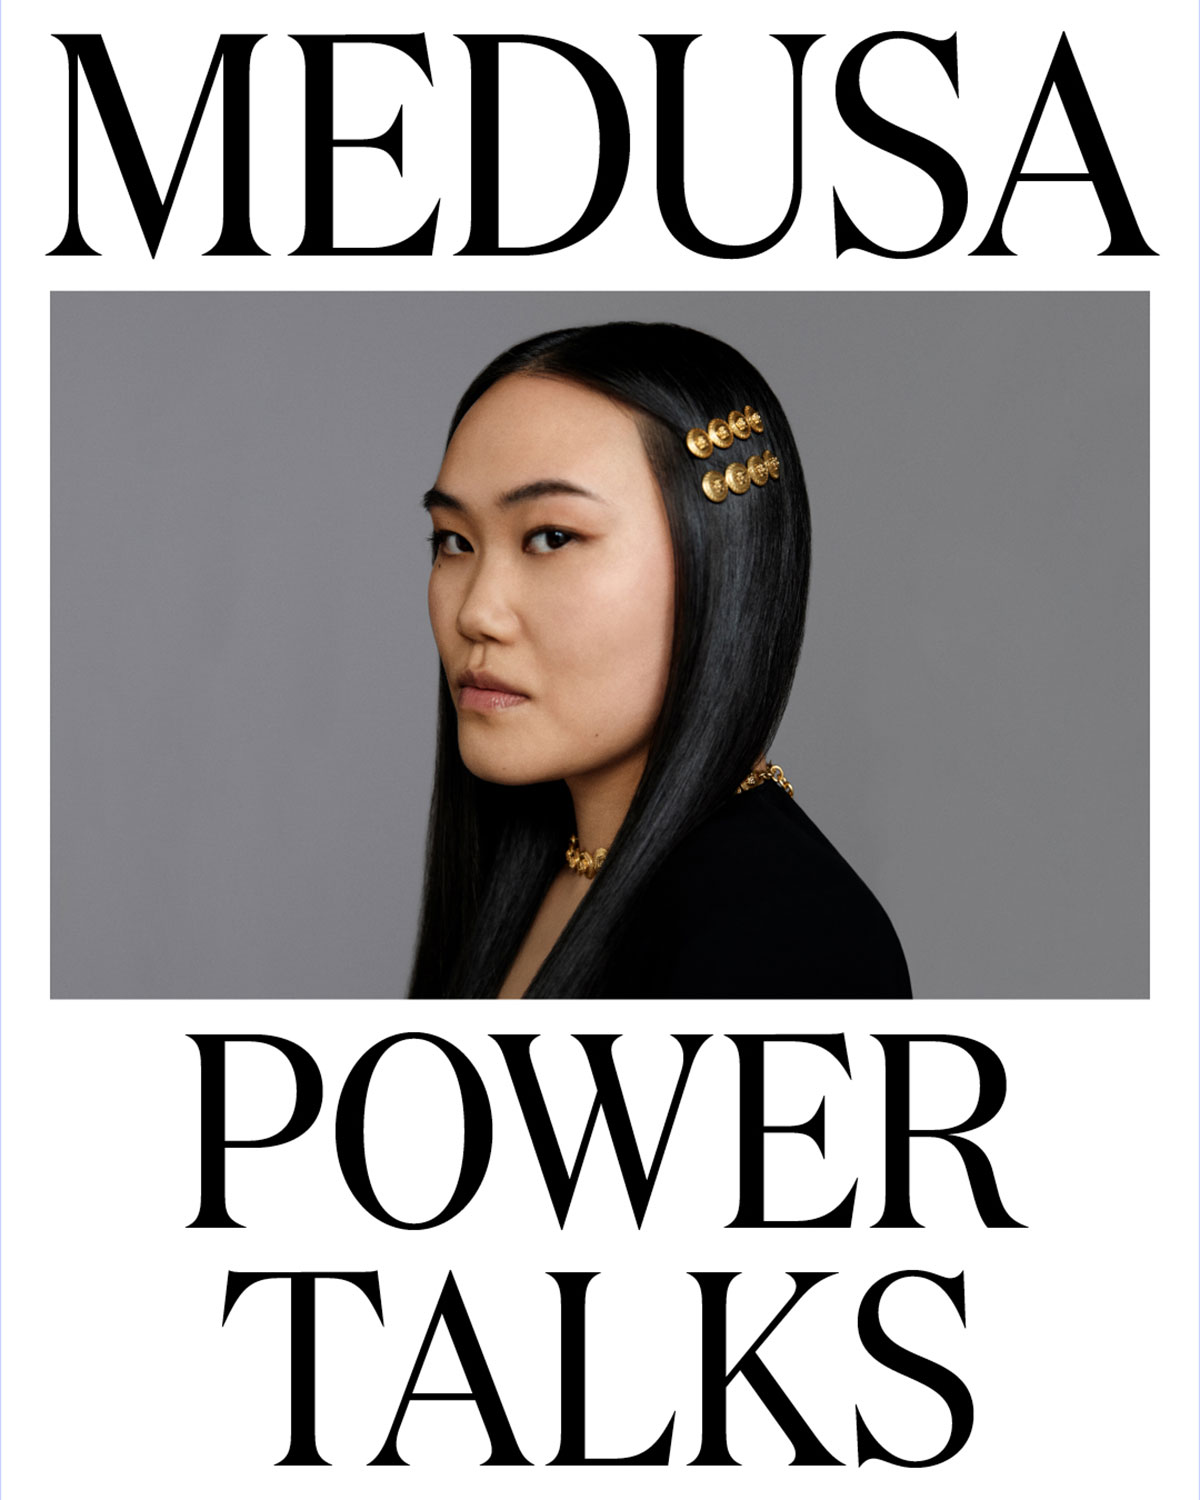 Versace_Medusa-Power-Talks